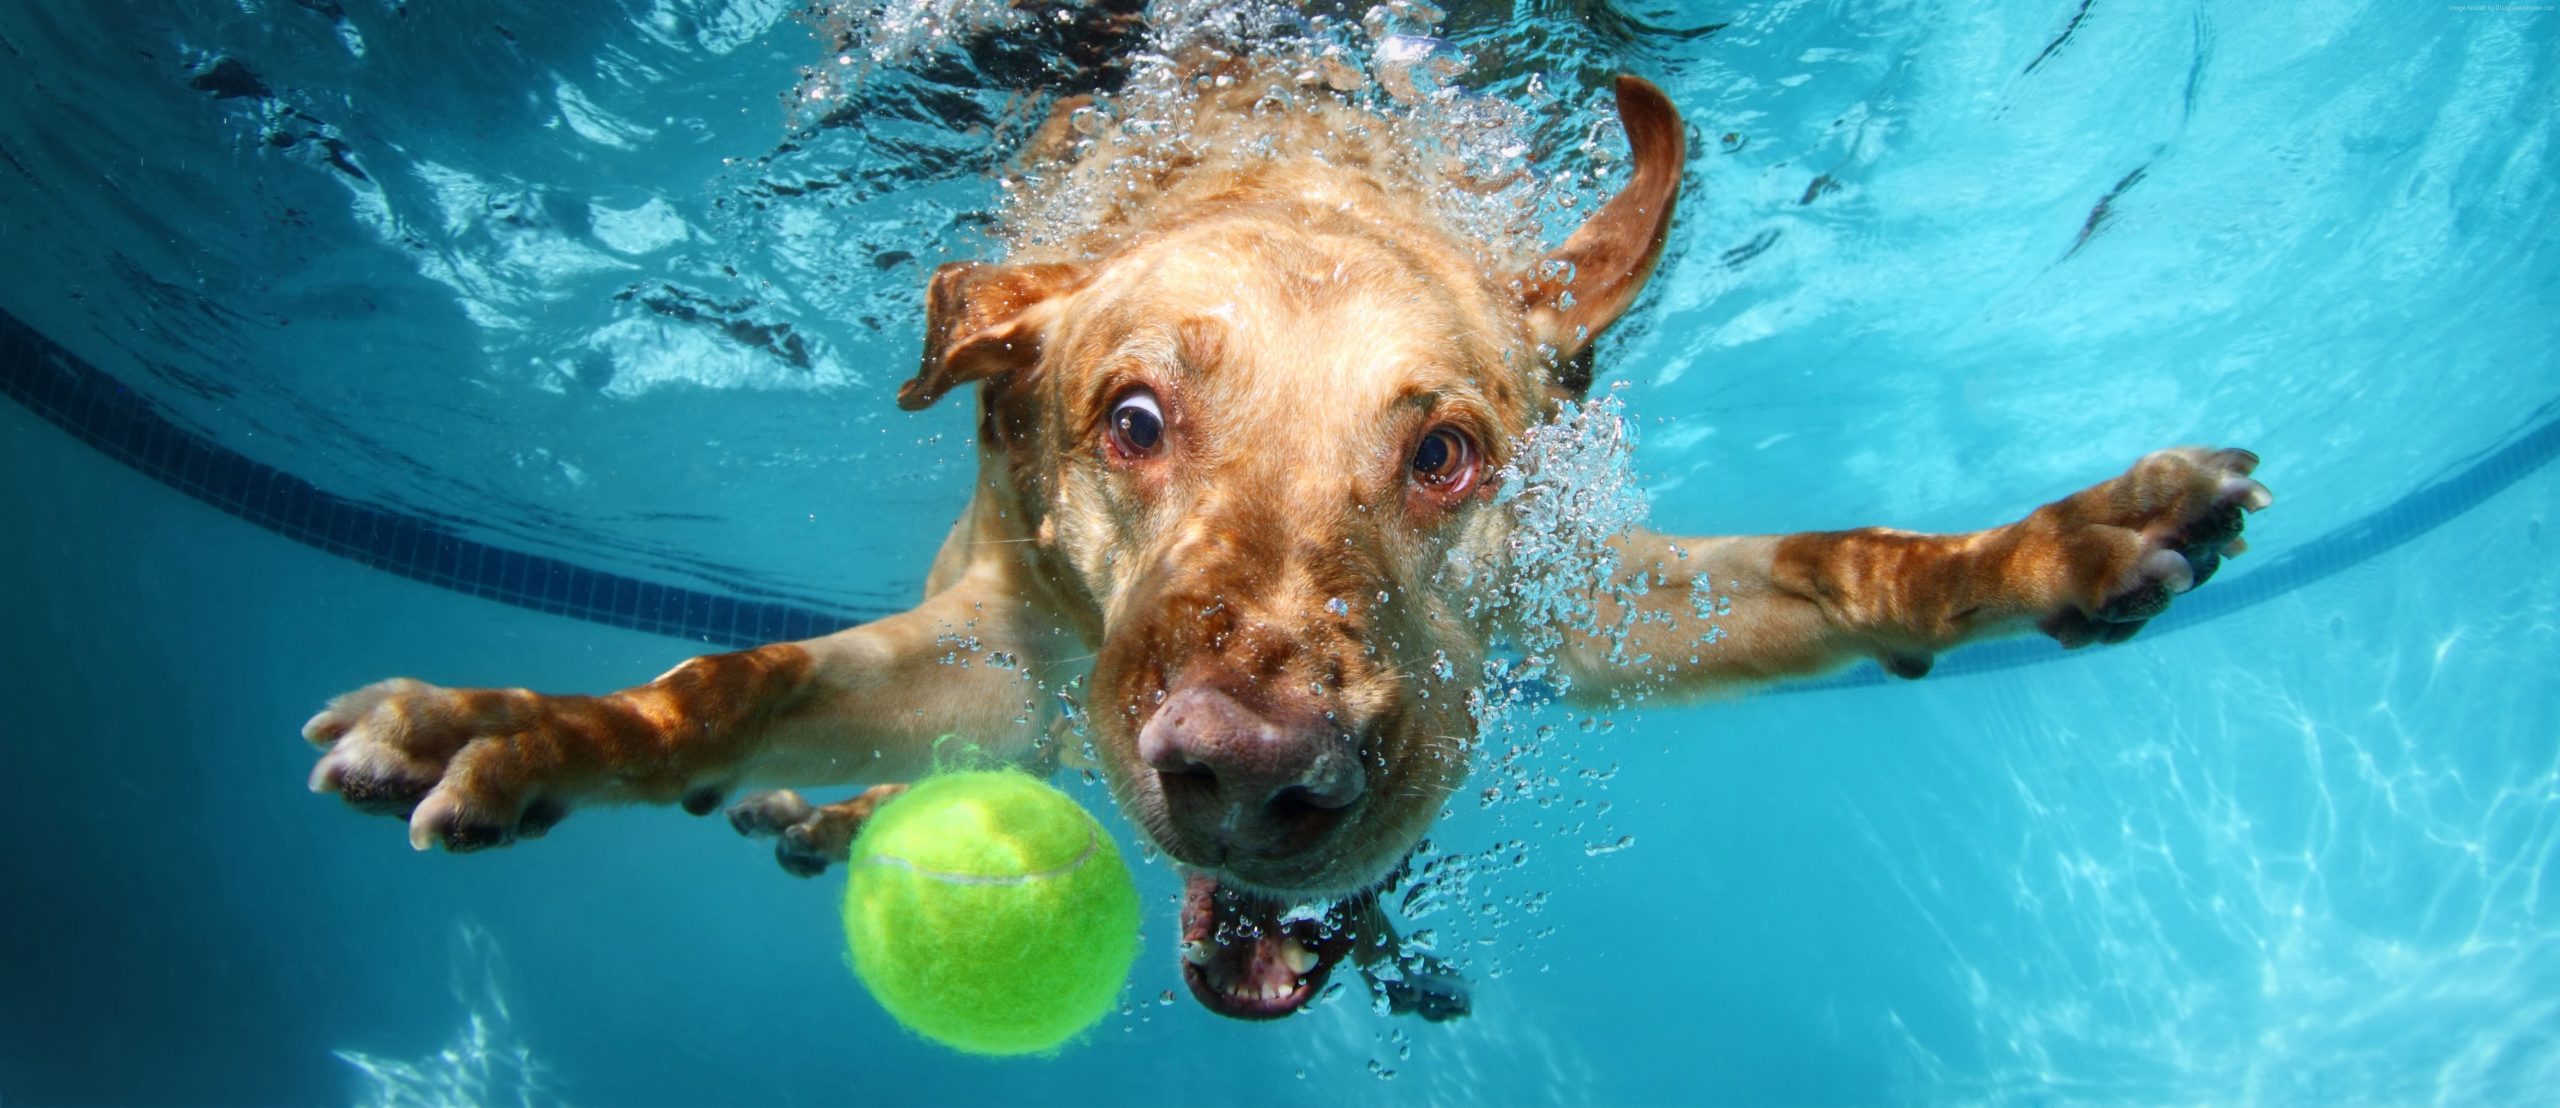 Labrador wallpaper, cute animals, funny, underwater, dog